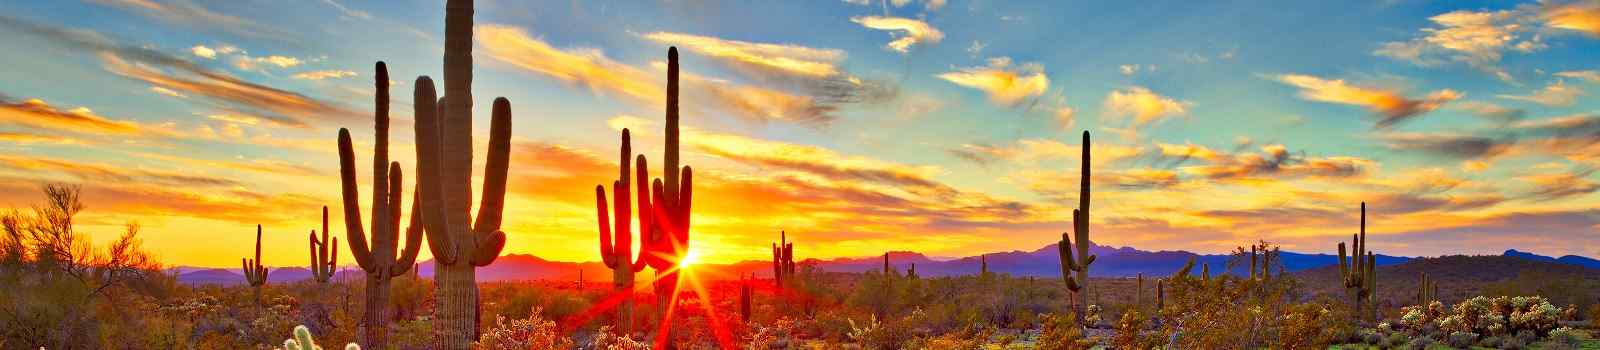 FAMILIE-WEST  Saguaros at sunset in Sonoran Desert near Phoenix shutterstock 550221112